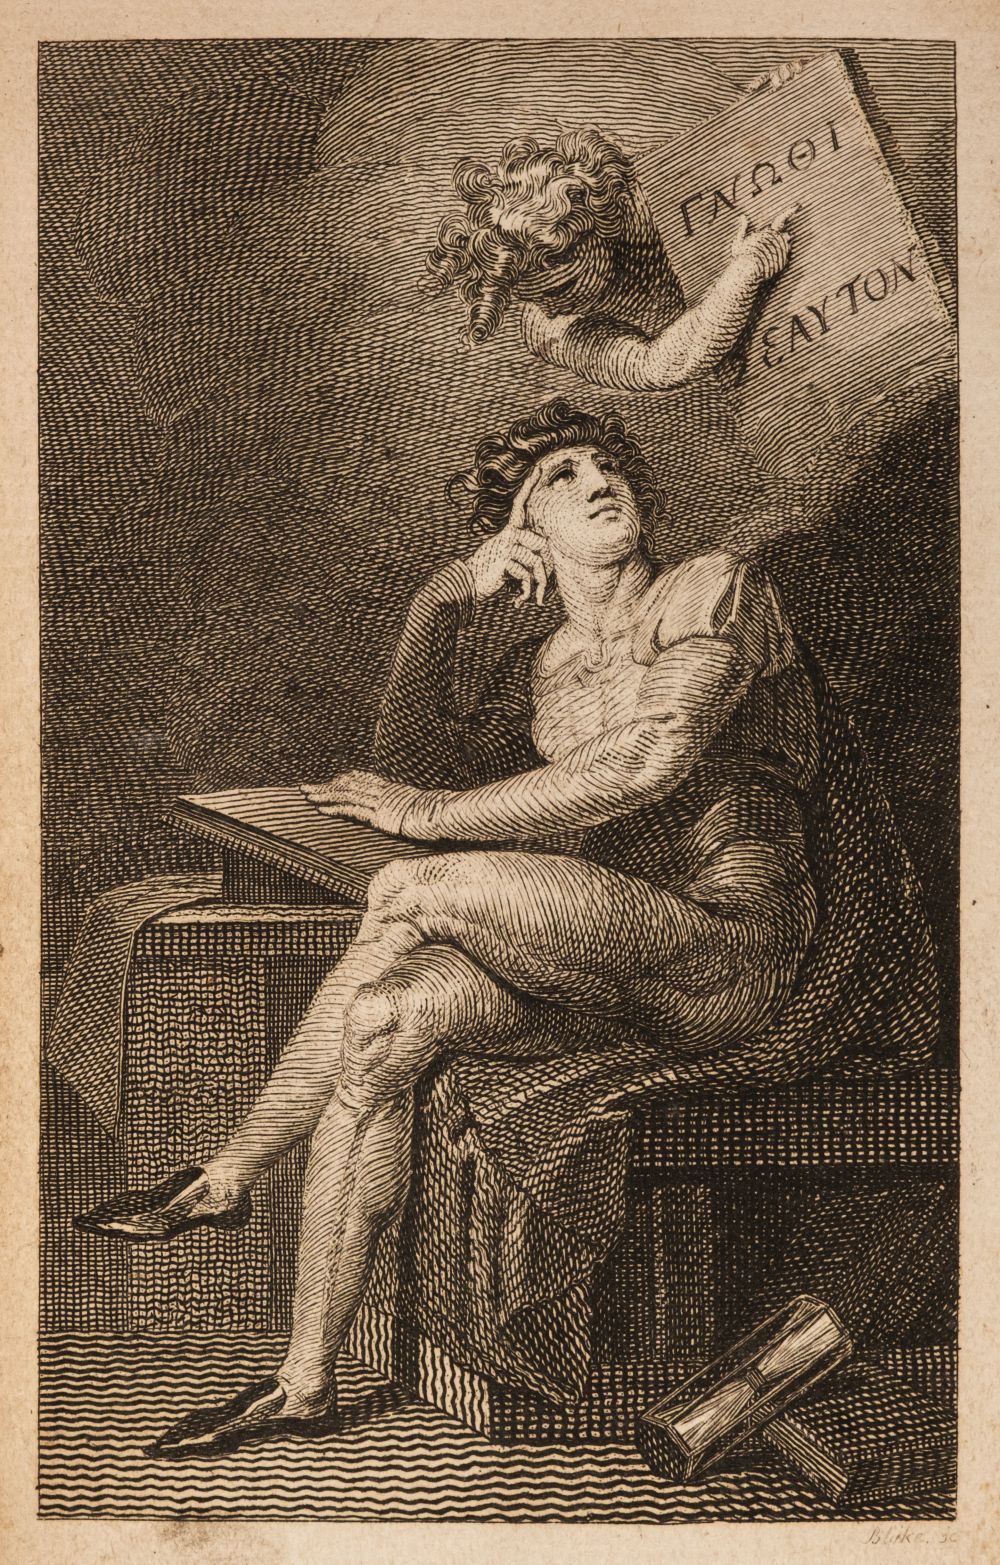 Blake (William, illustrator). Aphorisms on Man, 1789..., and others